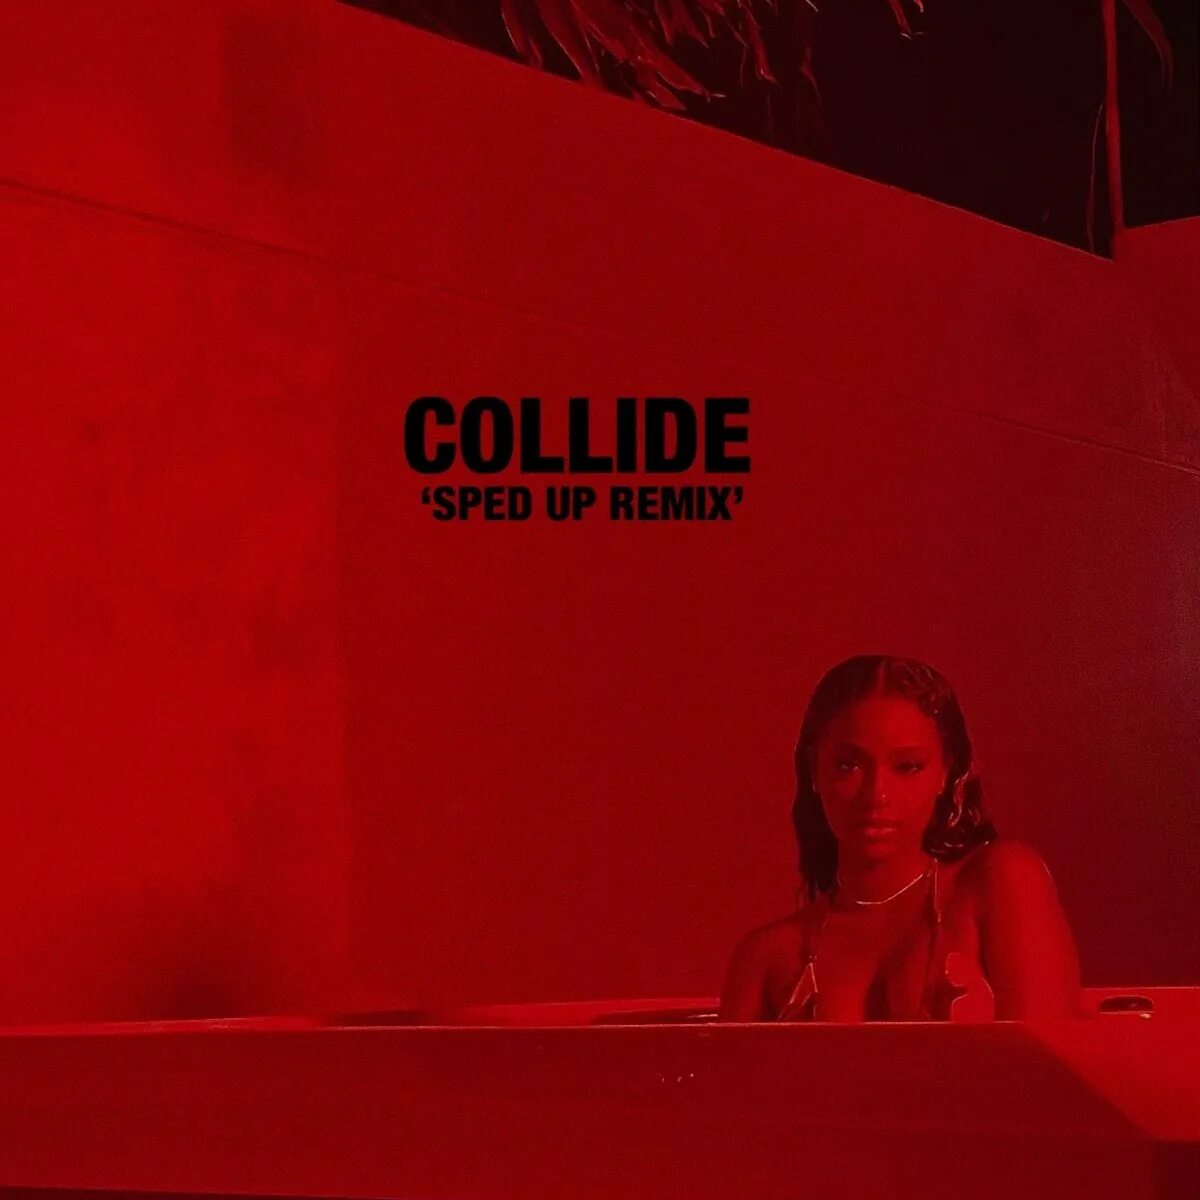 Collide Speed up. Collide Justine Skye. Tyga ft Collide Justine. Collide feat. Tyga. Нежная speed up ремикс